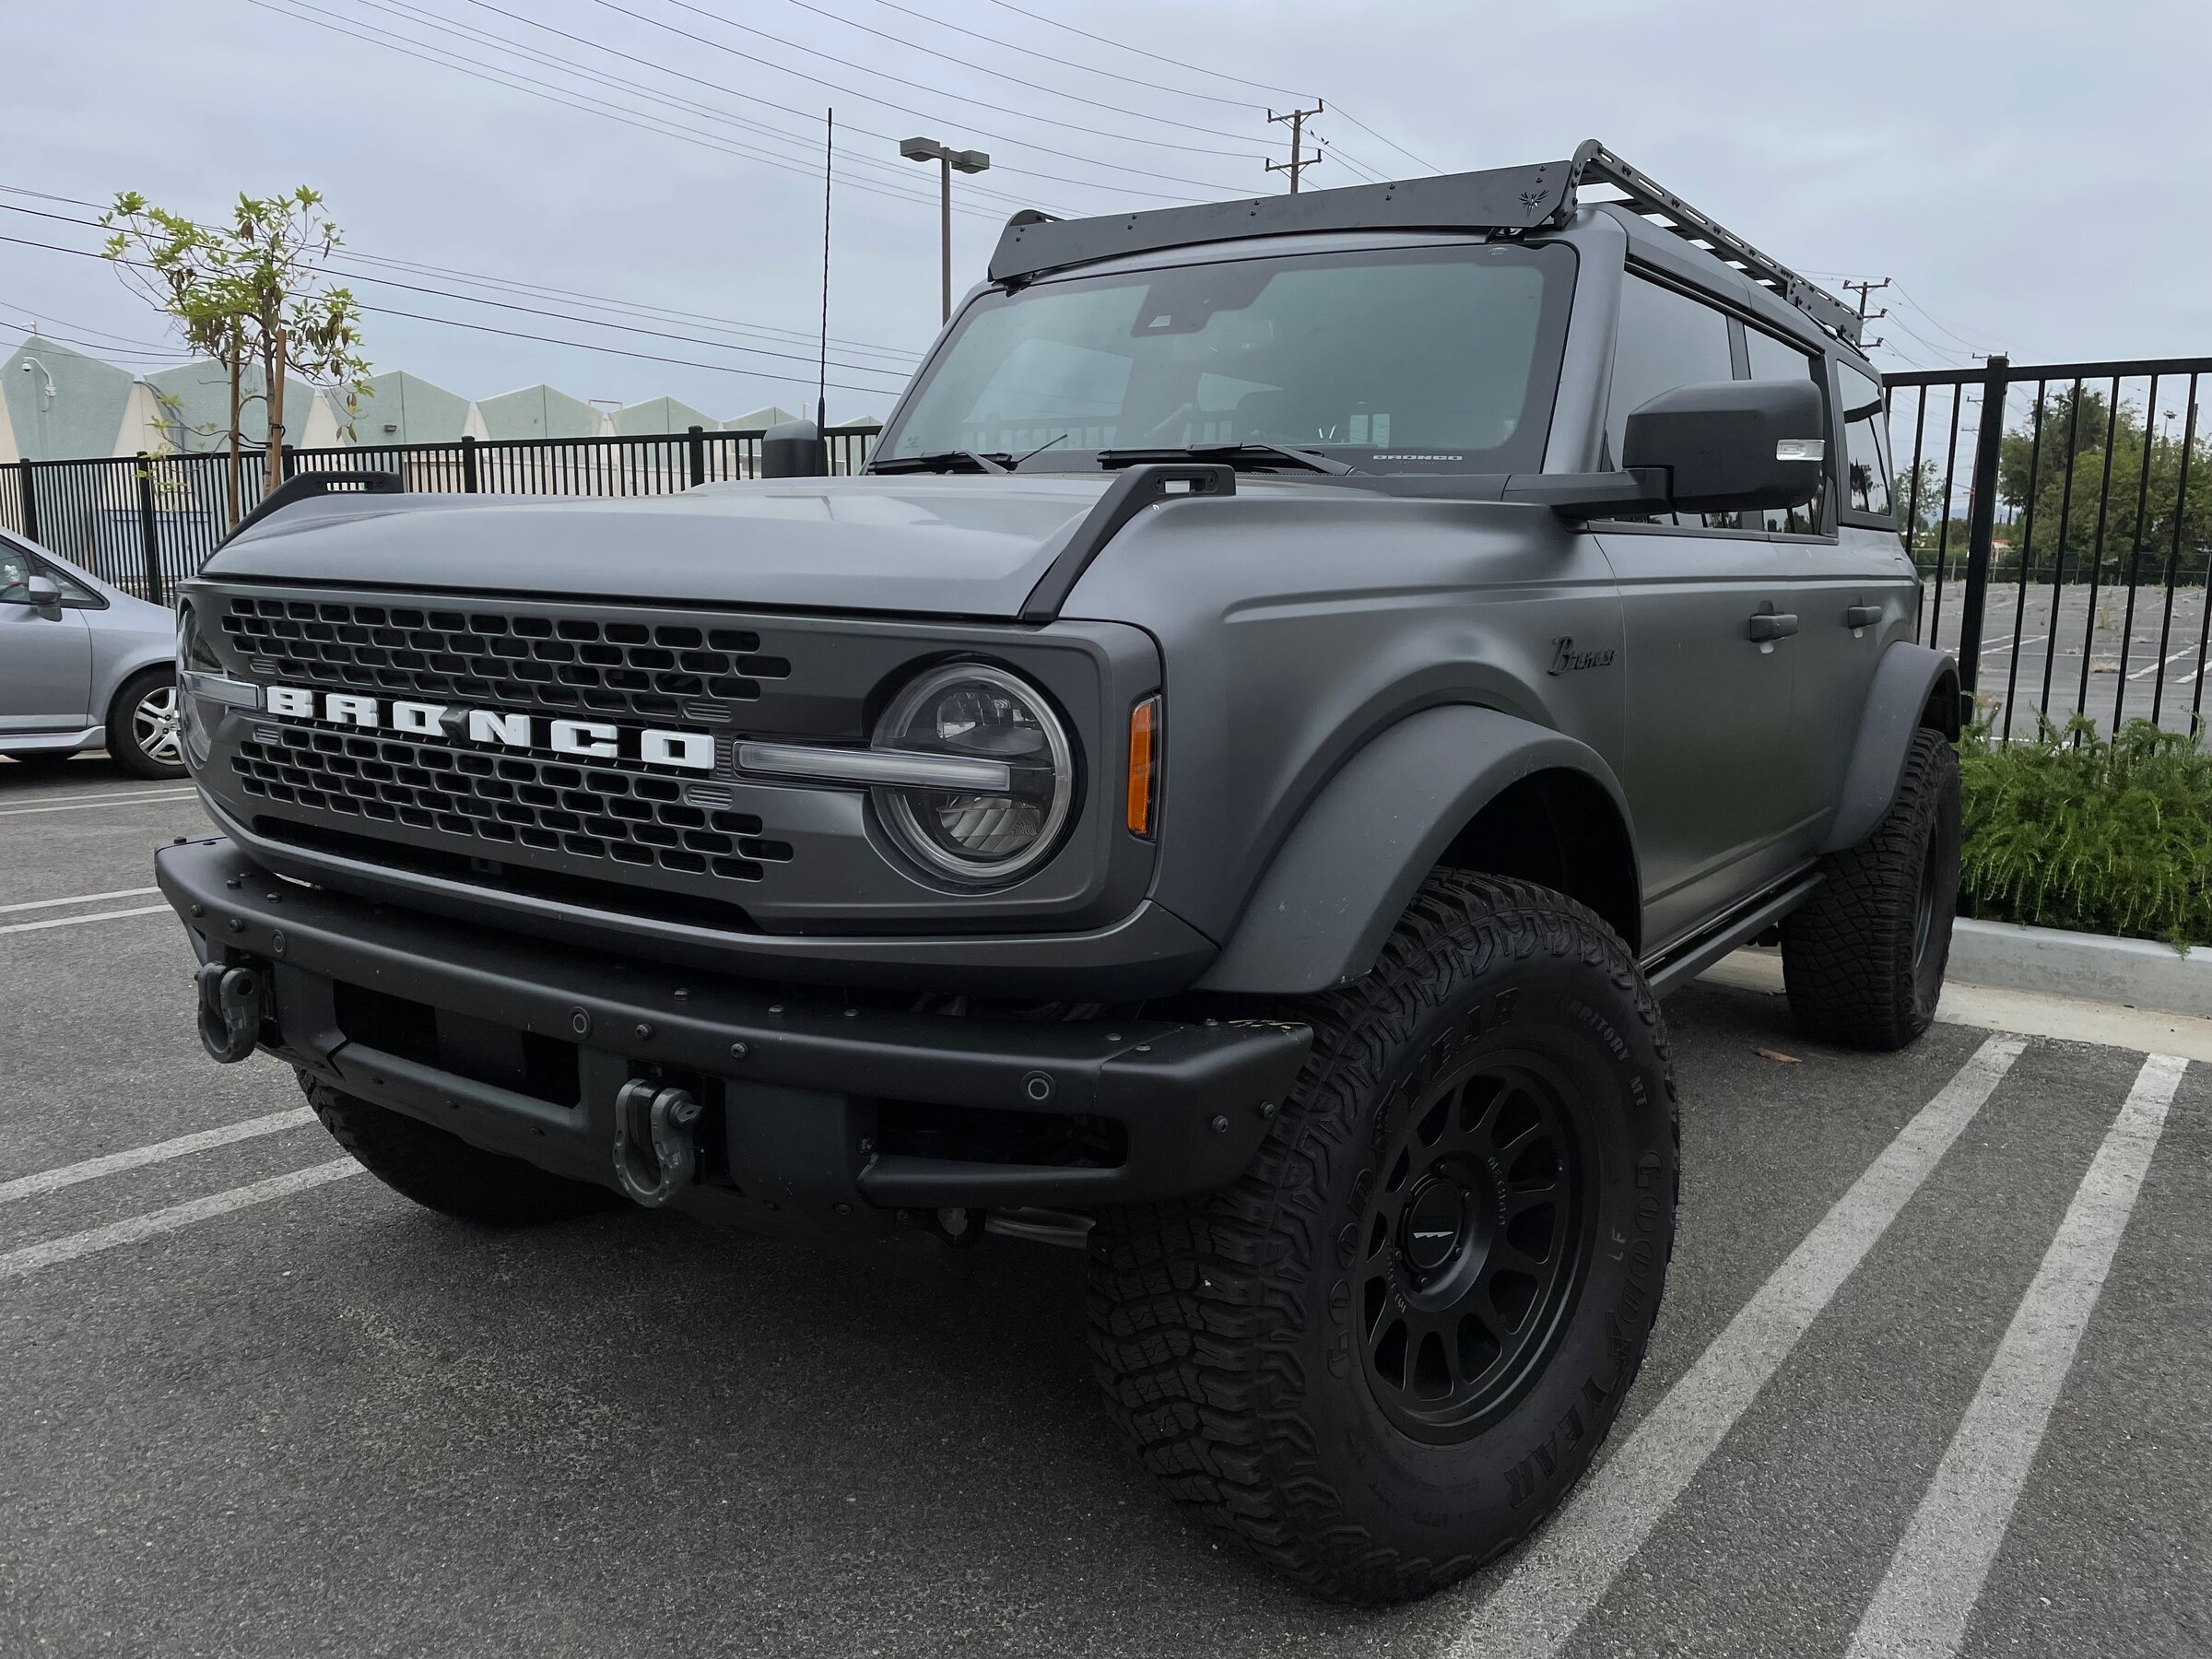 Ford Bronco Project “Terminator Bronco” overland build img_0098-jpe